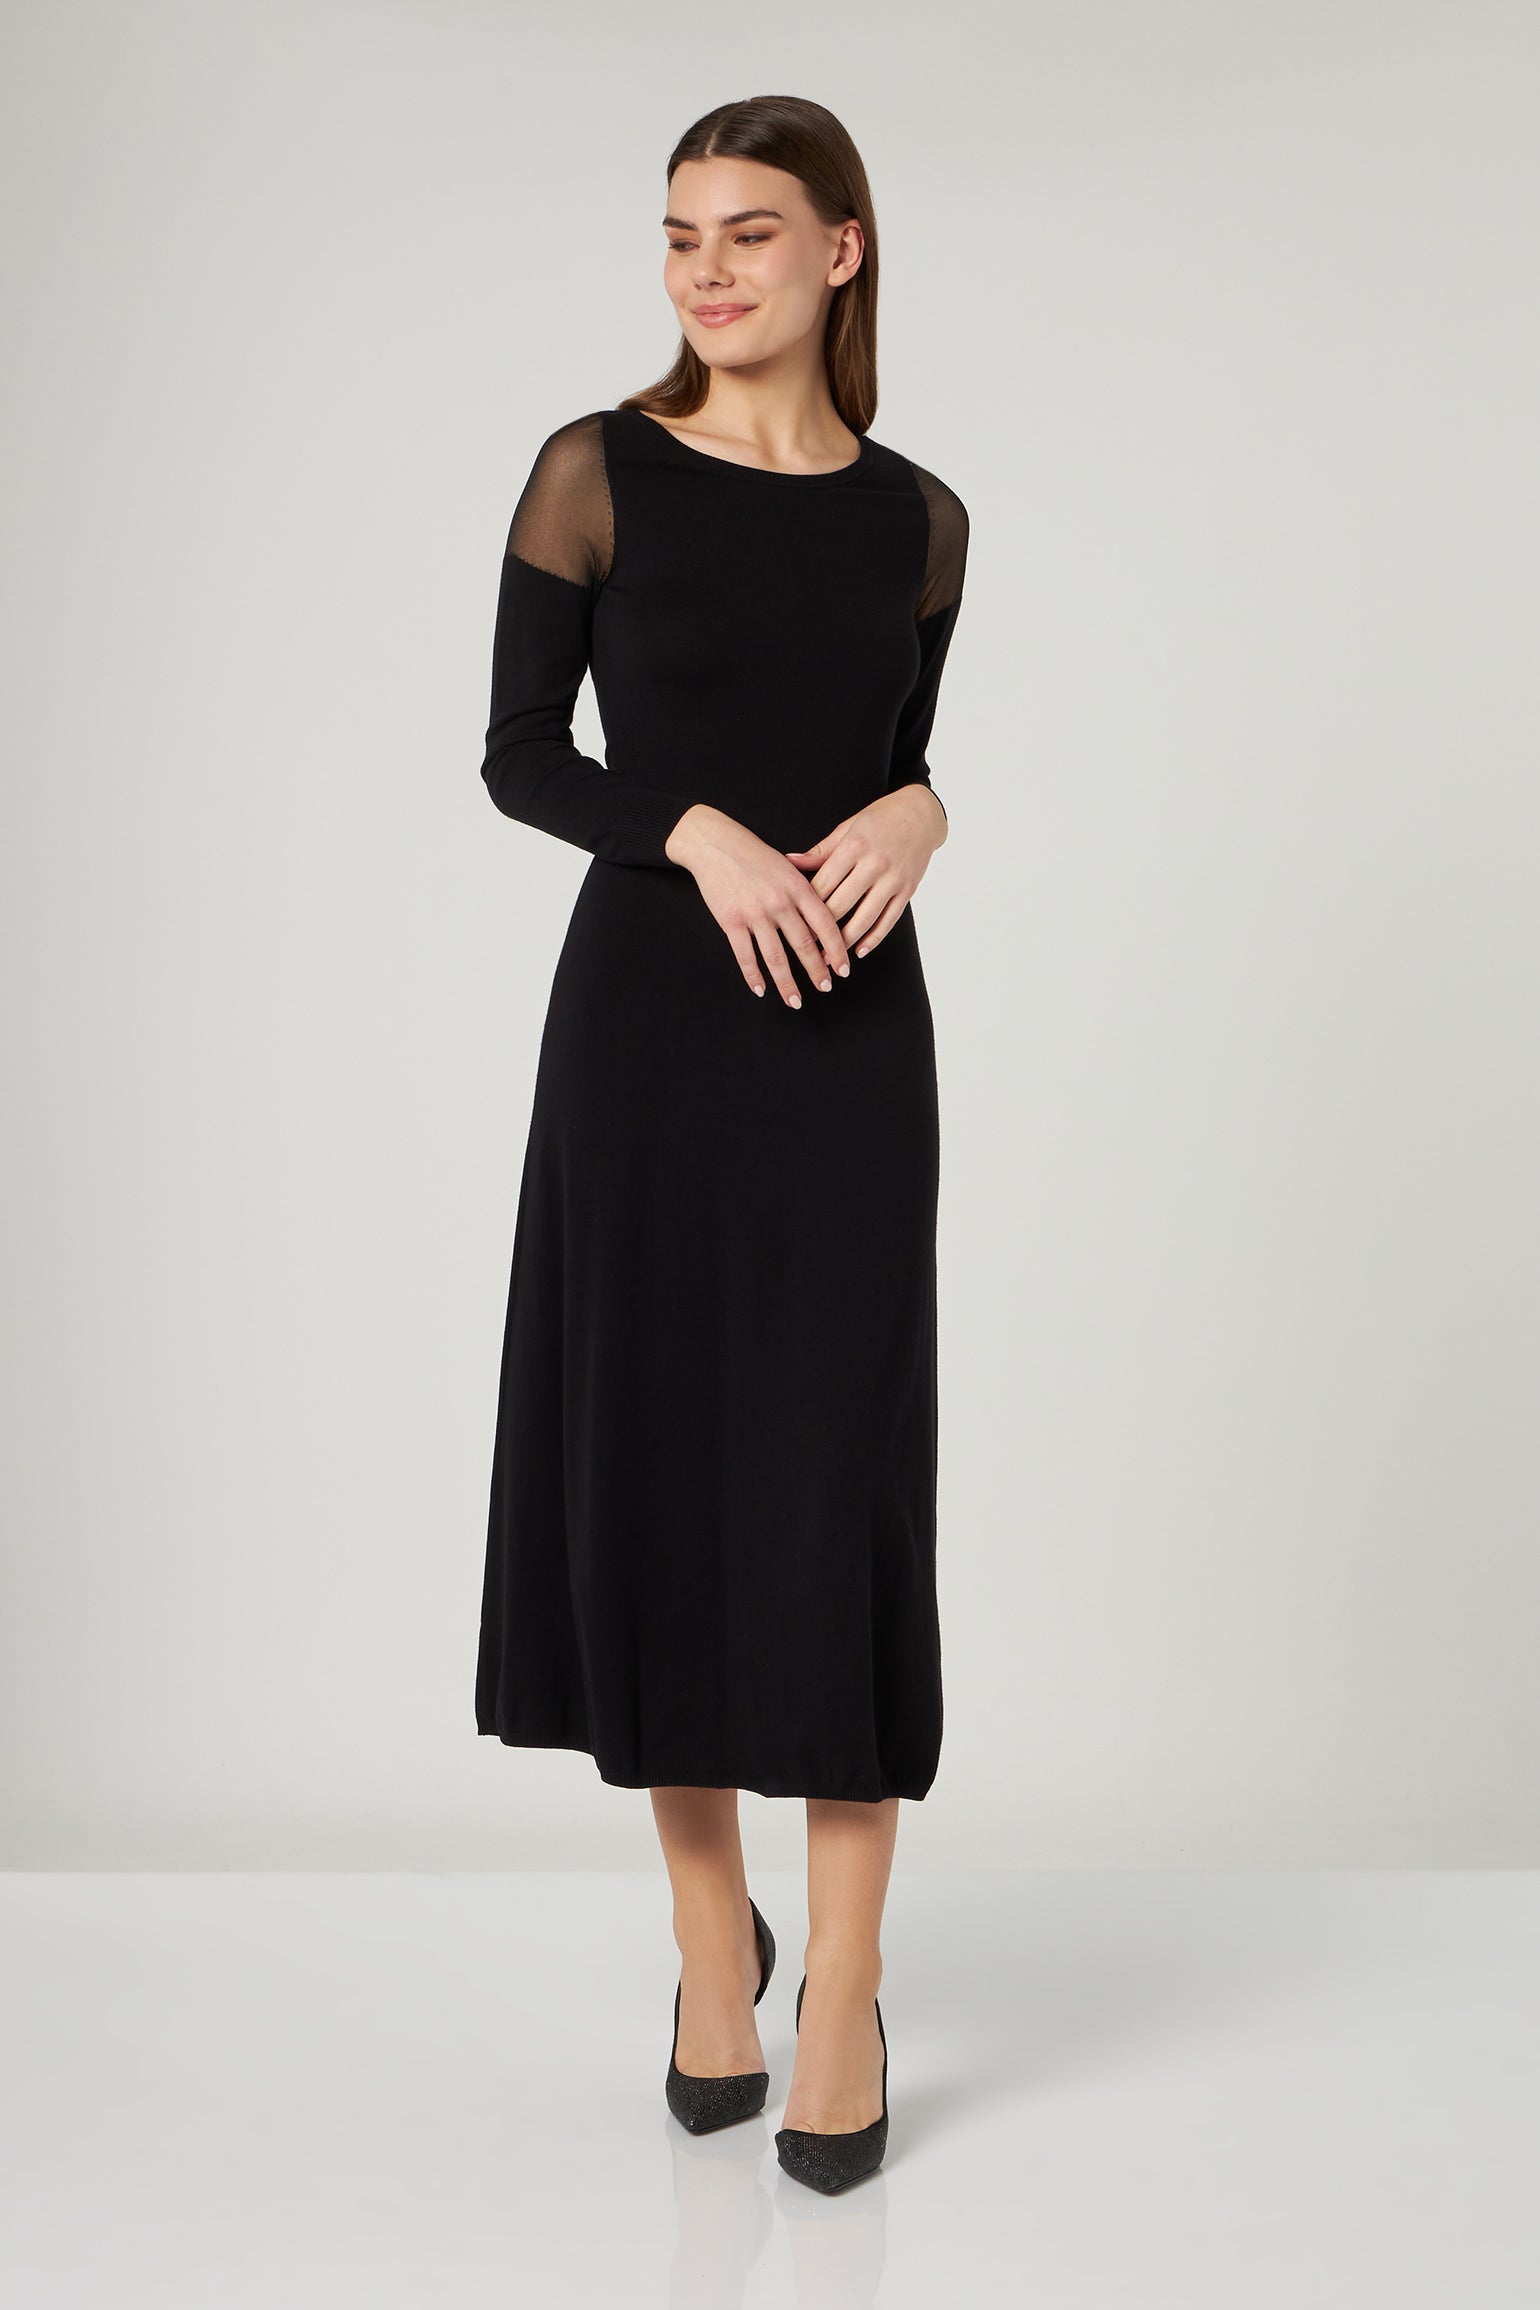 PATRIZIA PEPE Black Midi Dress with Transparencies